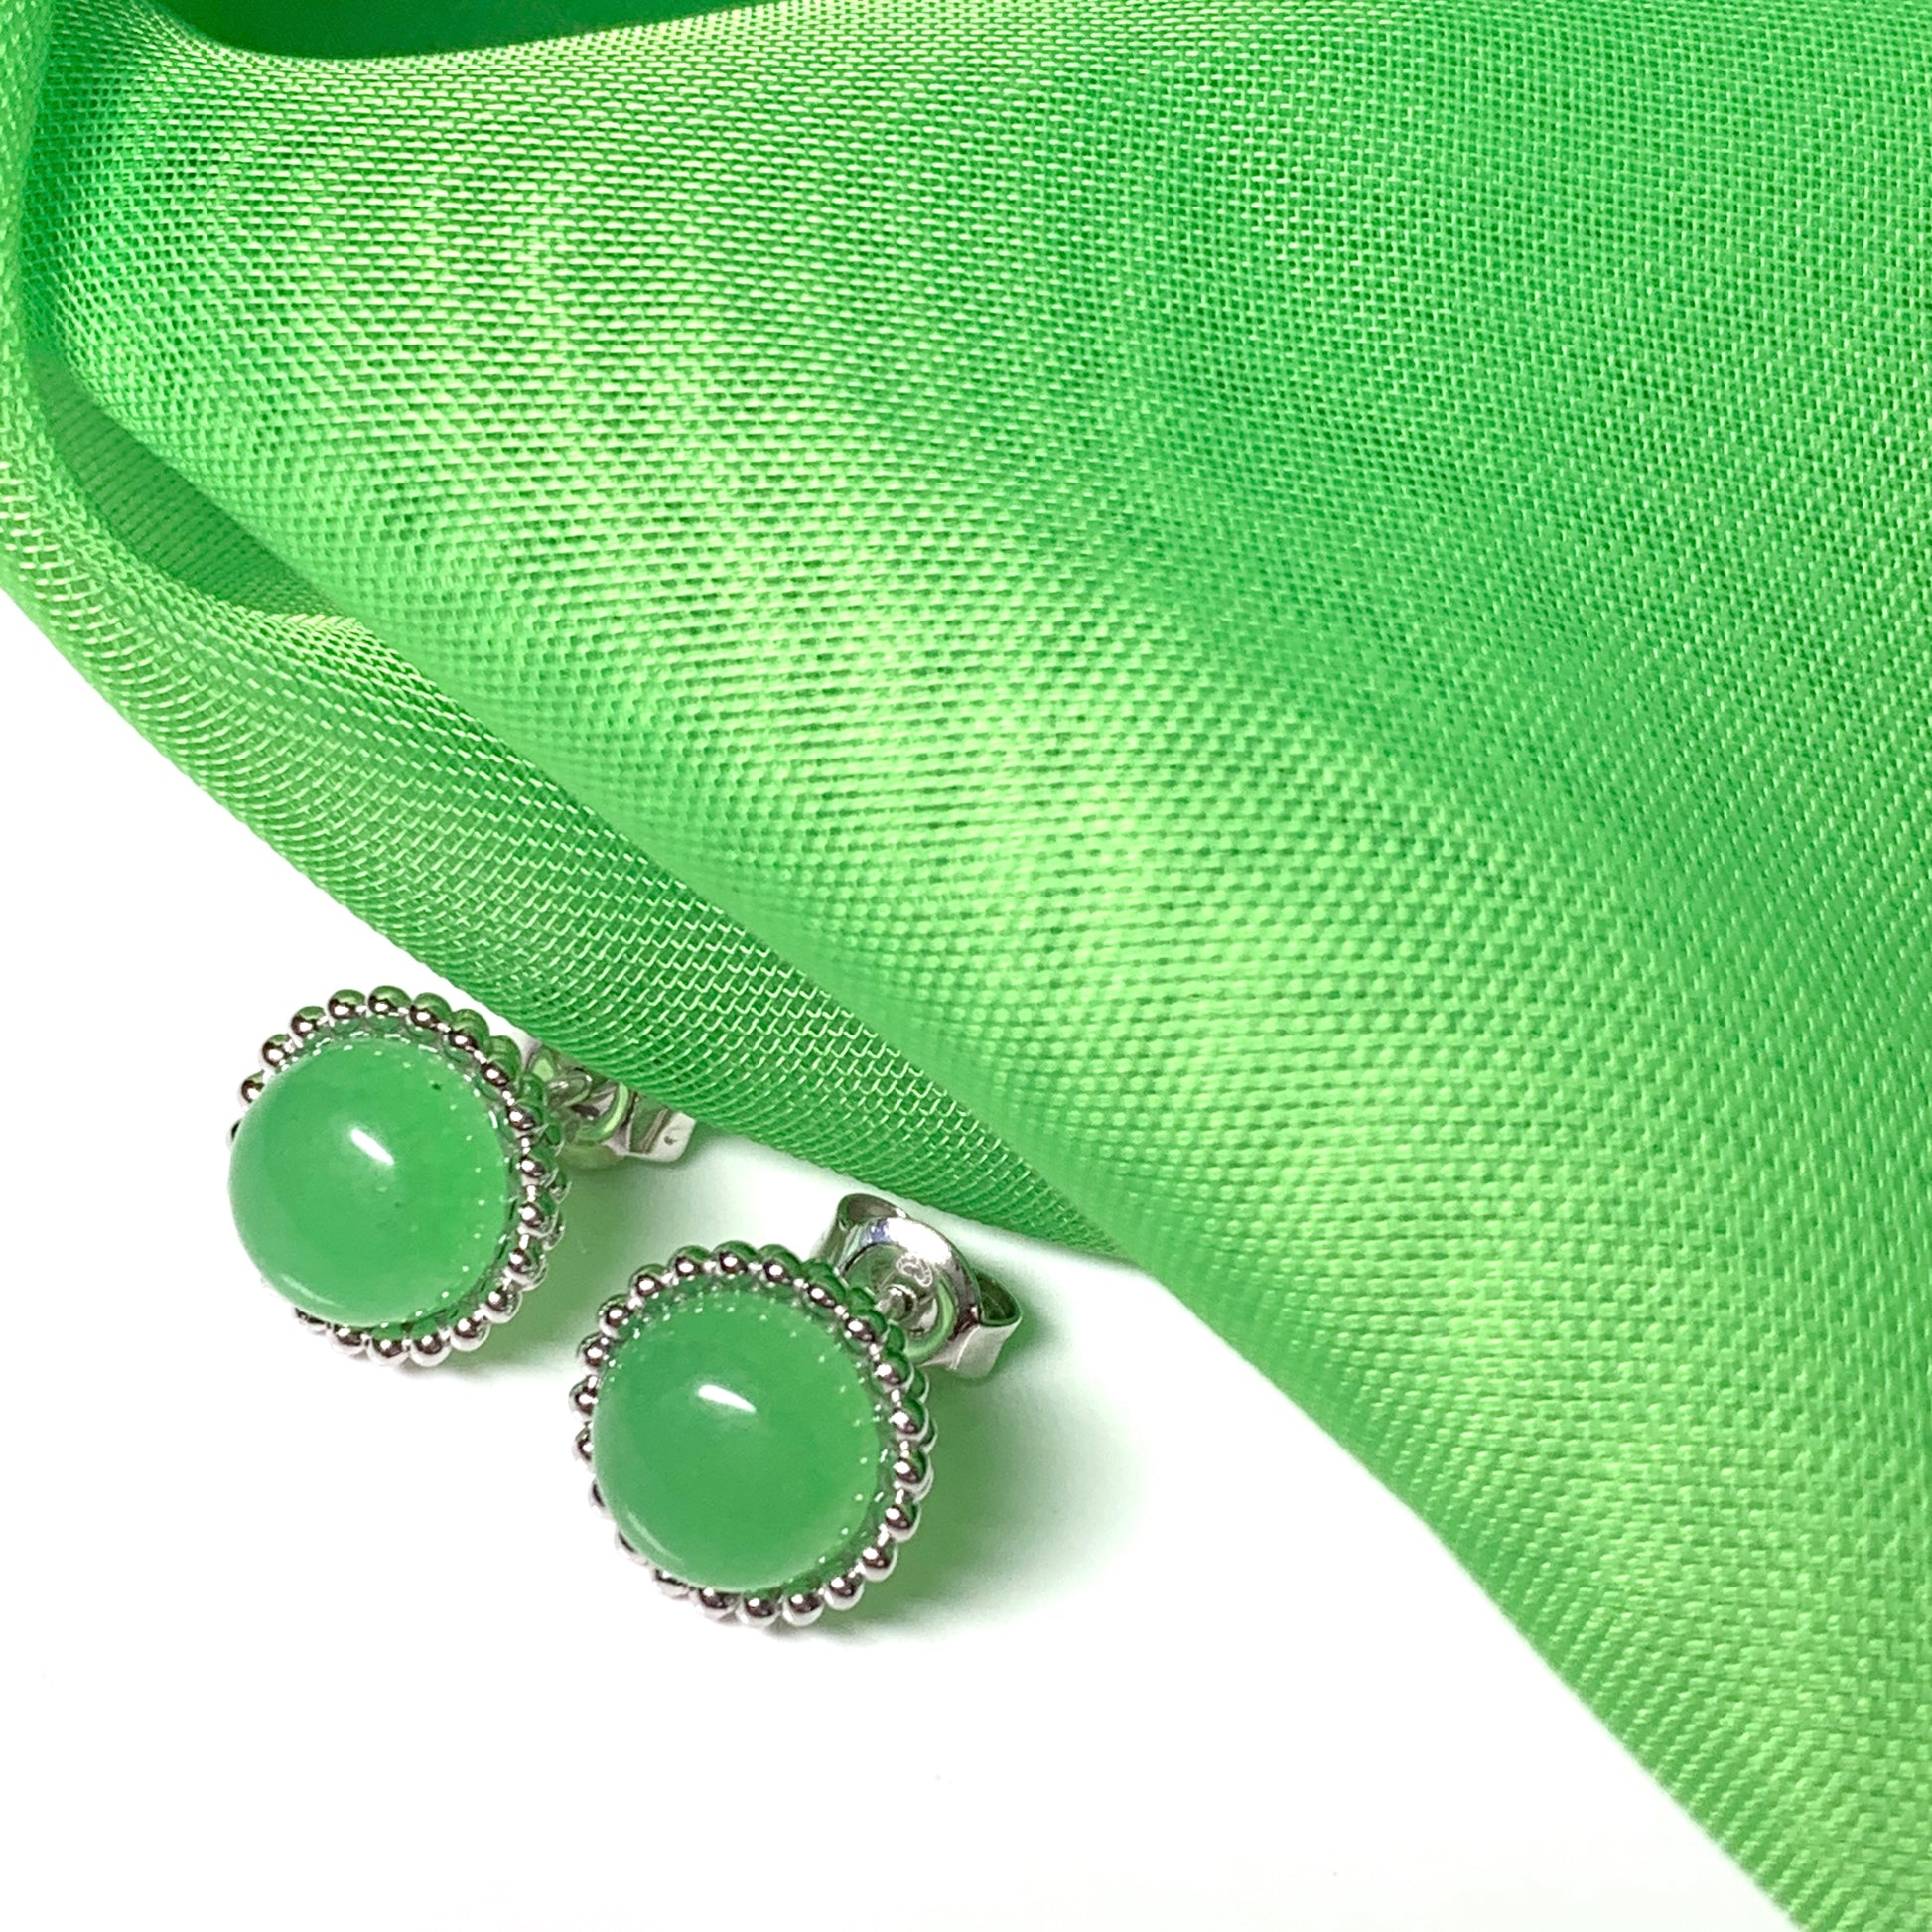 Green jade round patterned sterling silver stud earrings